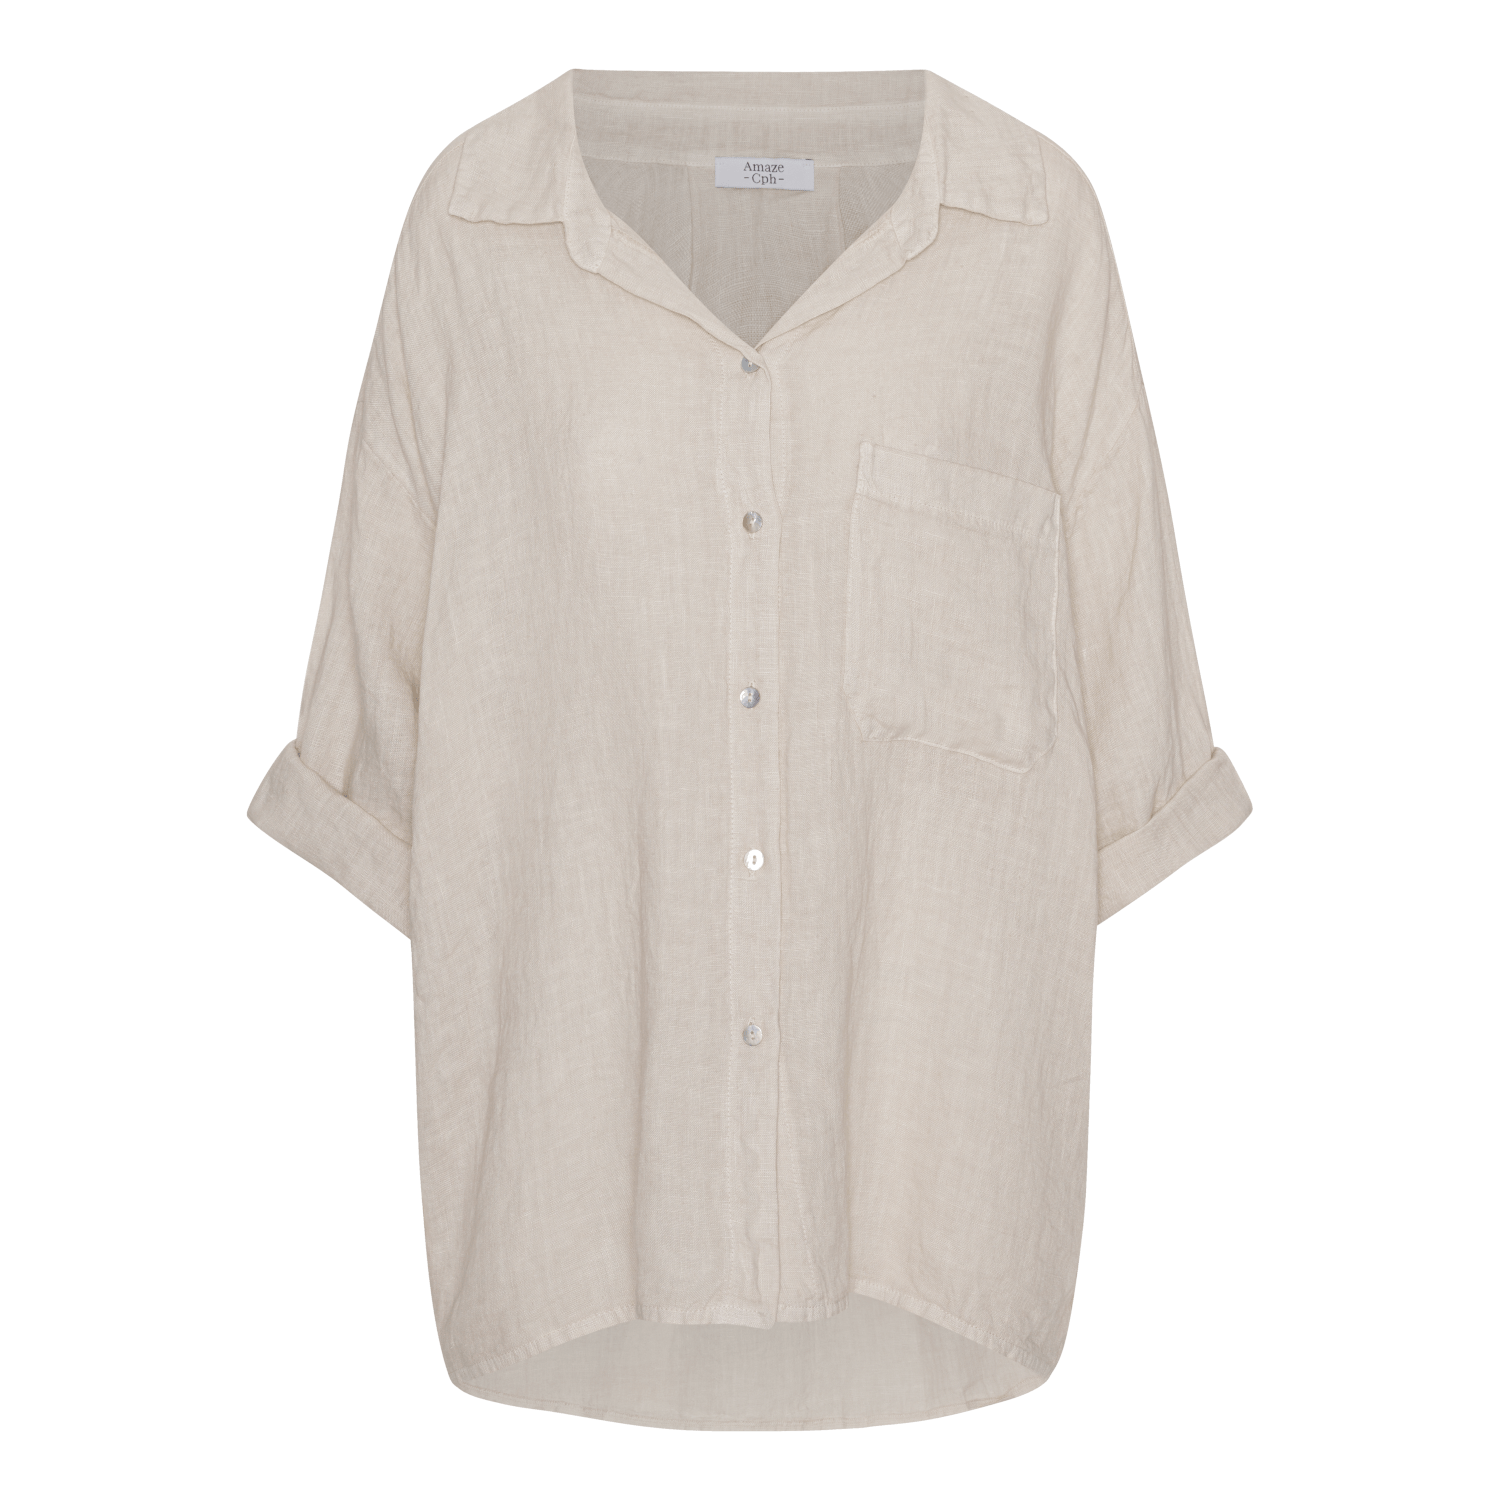 Oversized Linen Shirt - Sand - Amaze Cph - Sand - S/M